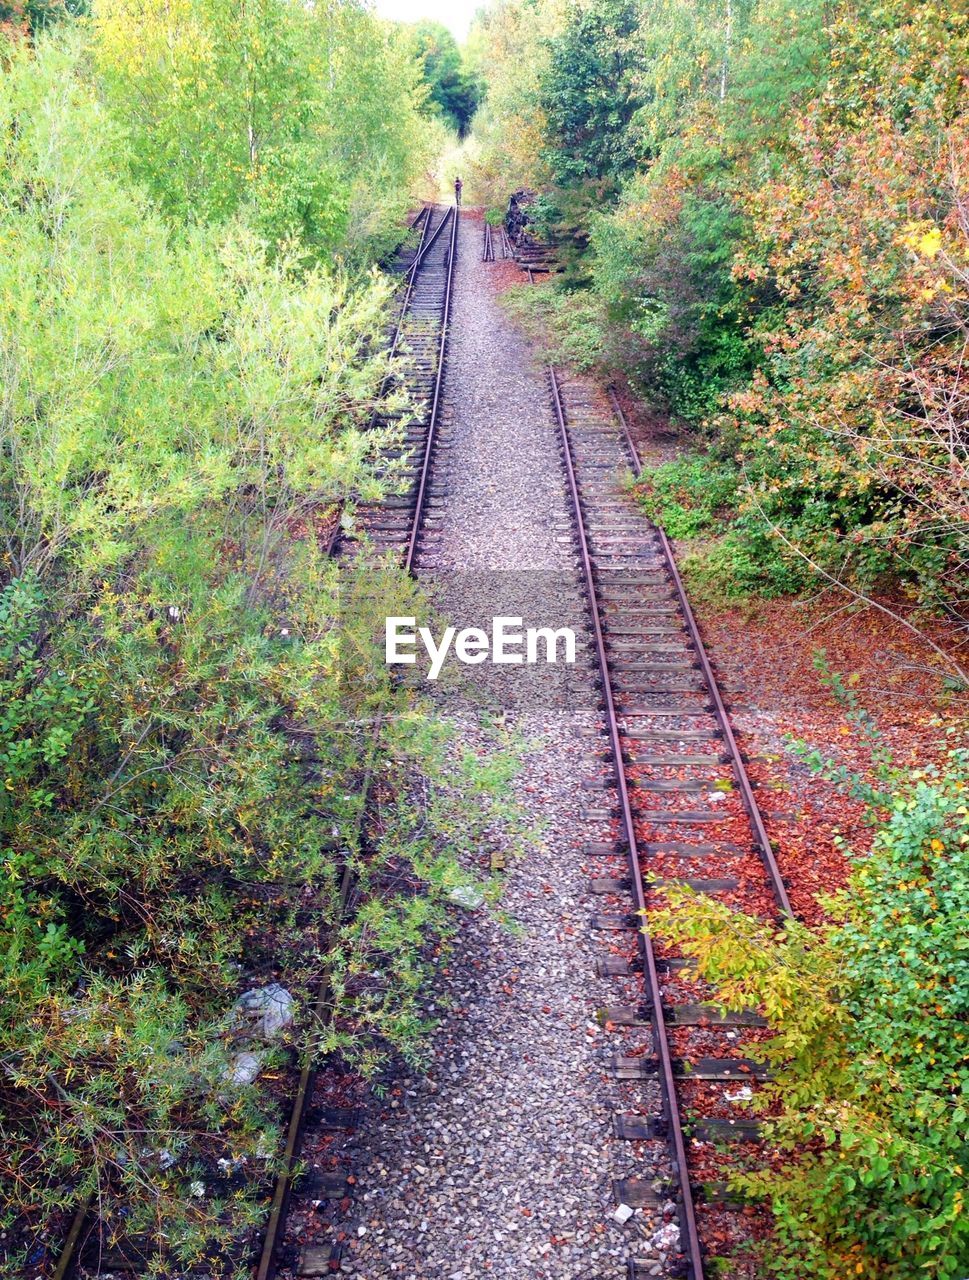 Overgrown narrow gauge railroad track